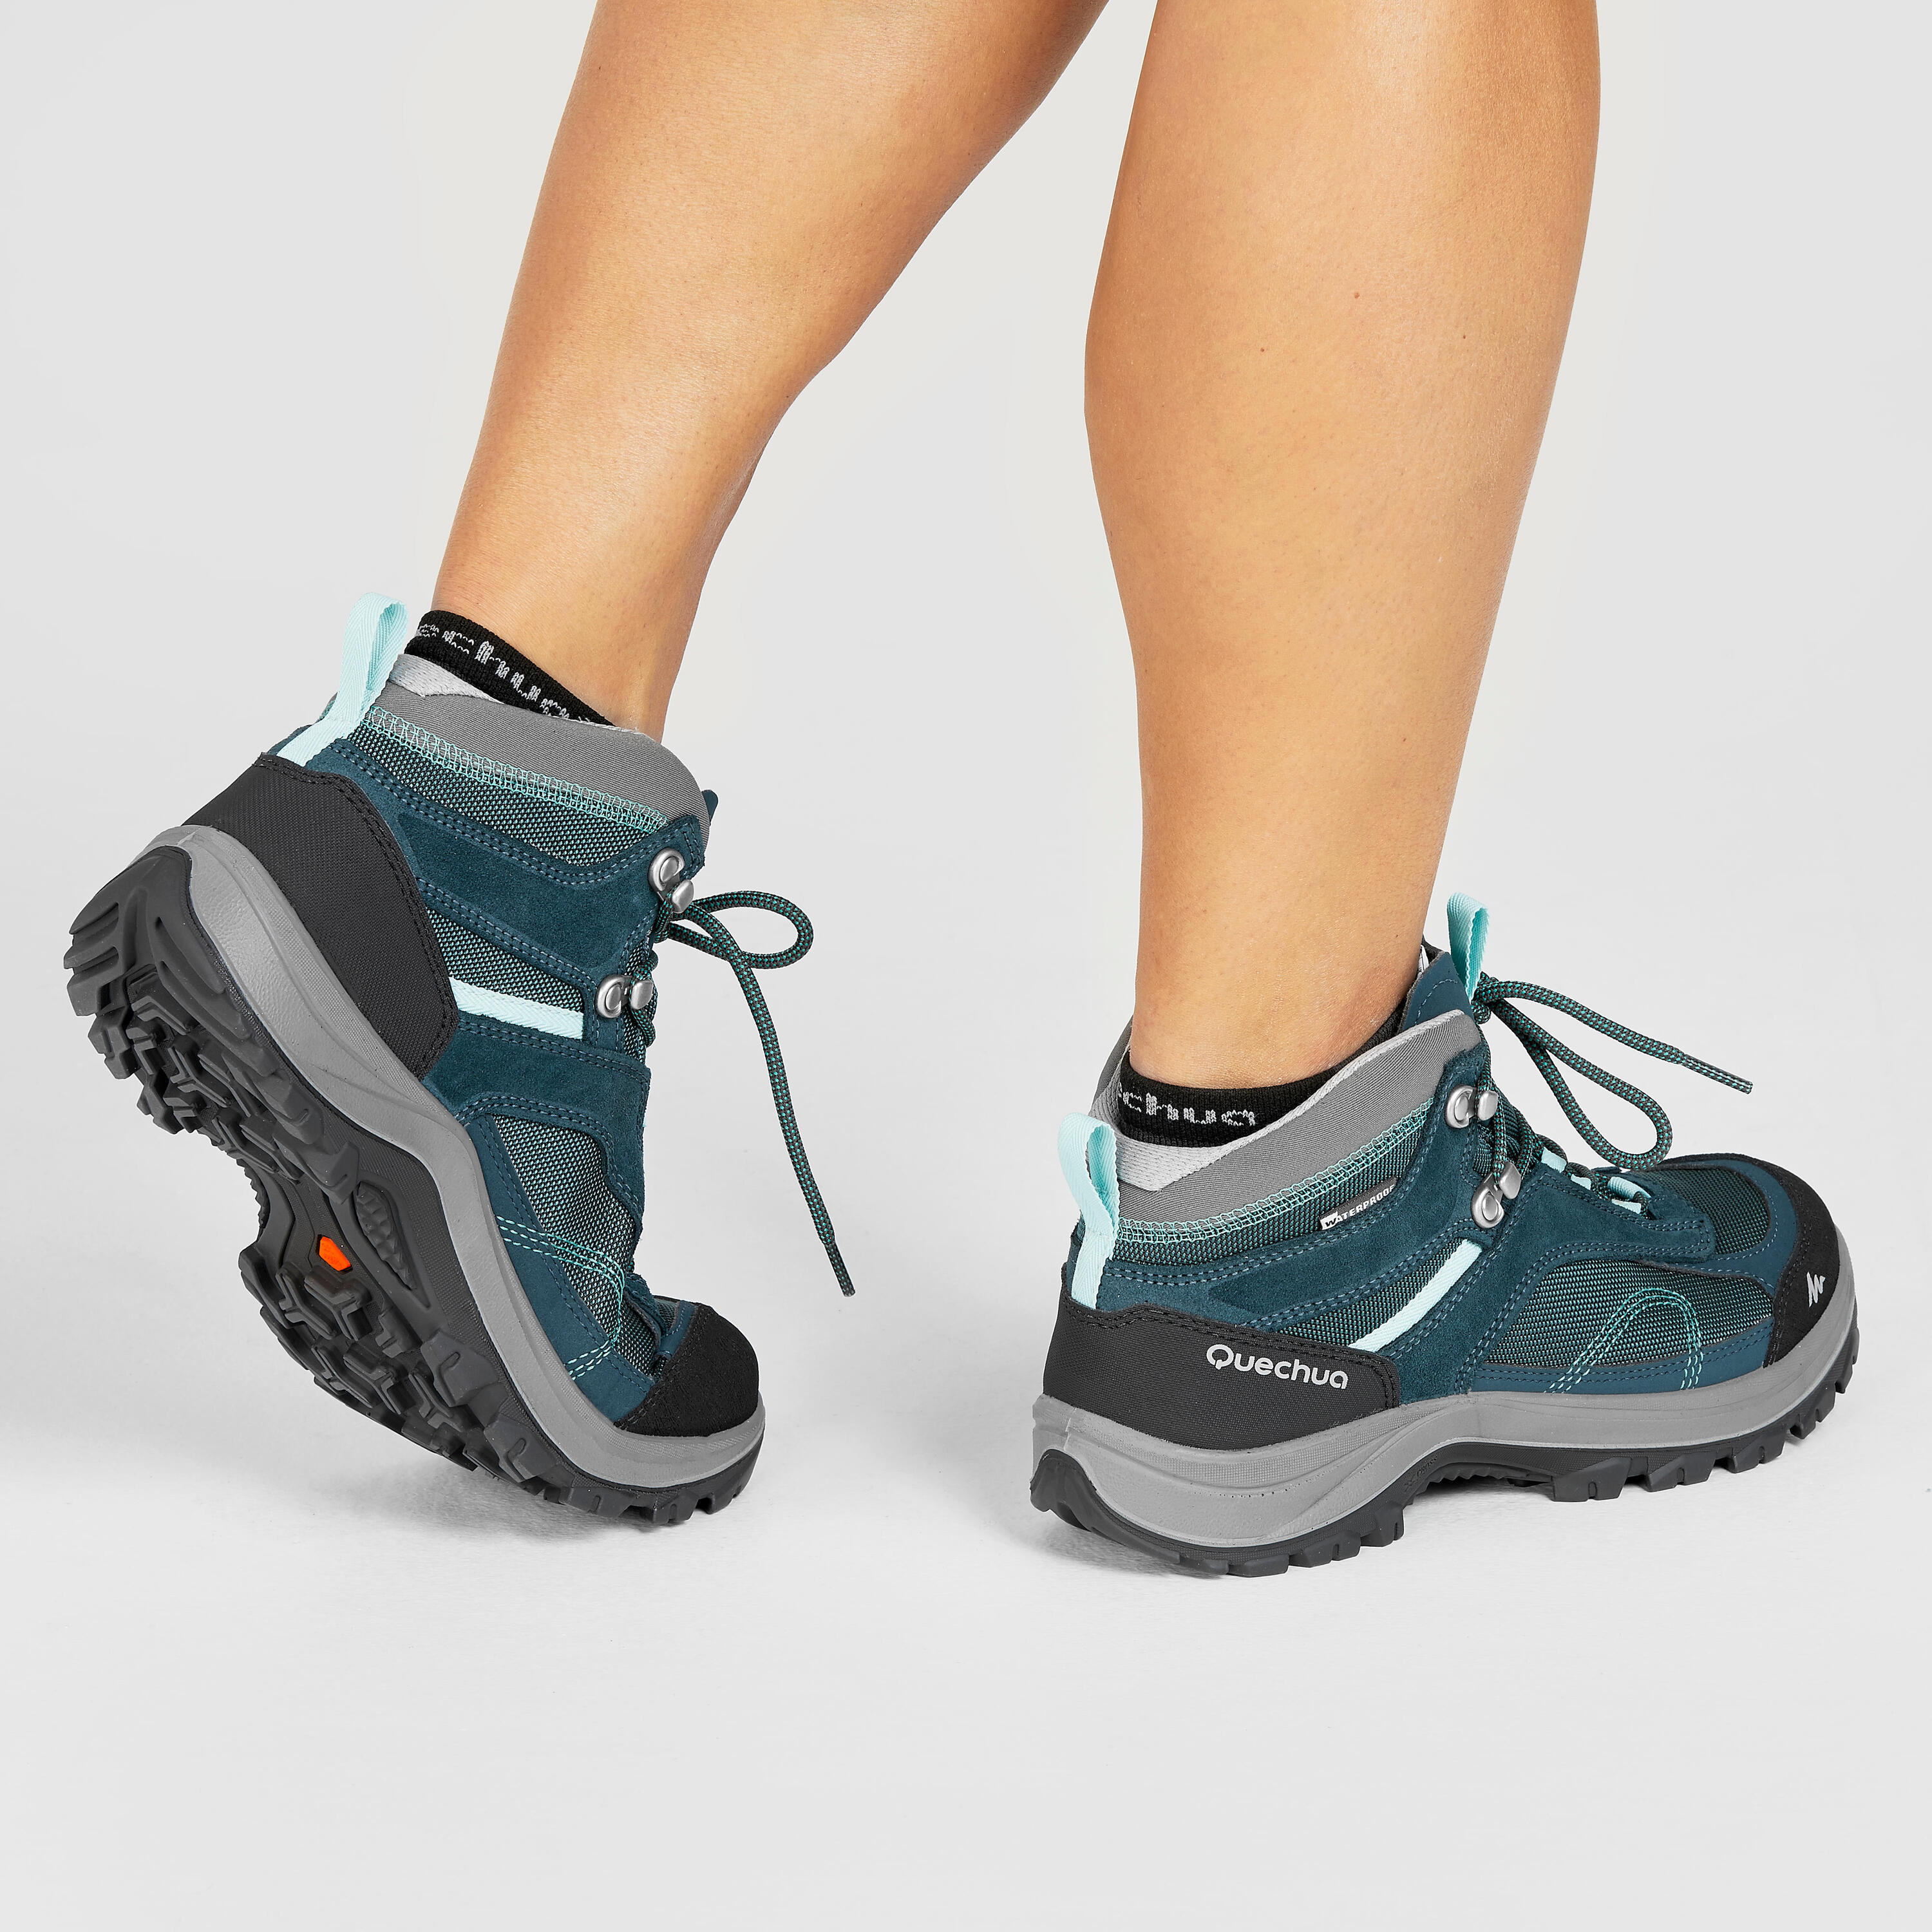 Women’s waterproof mountain walking boots - MH100 Mid - Turquoise 6/8